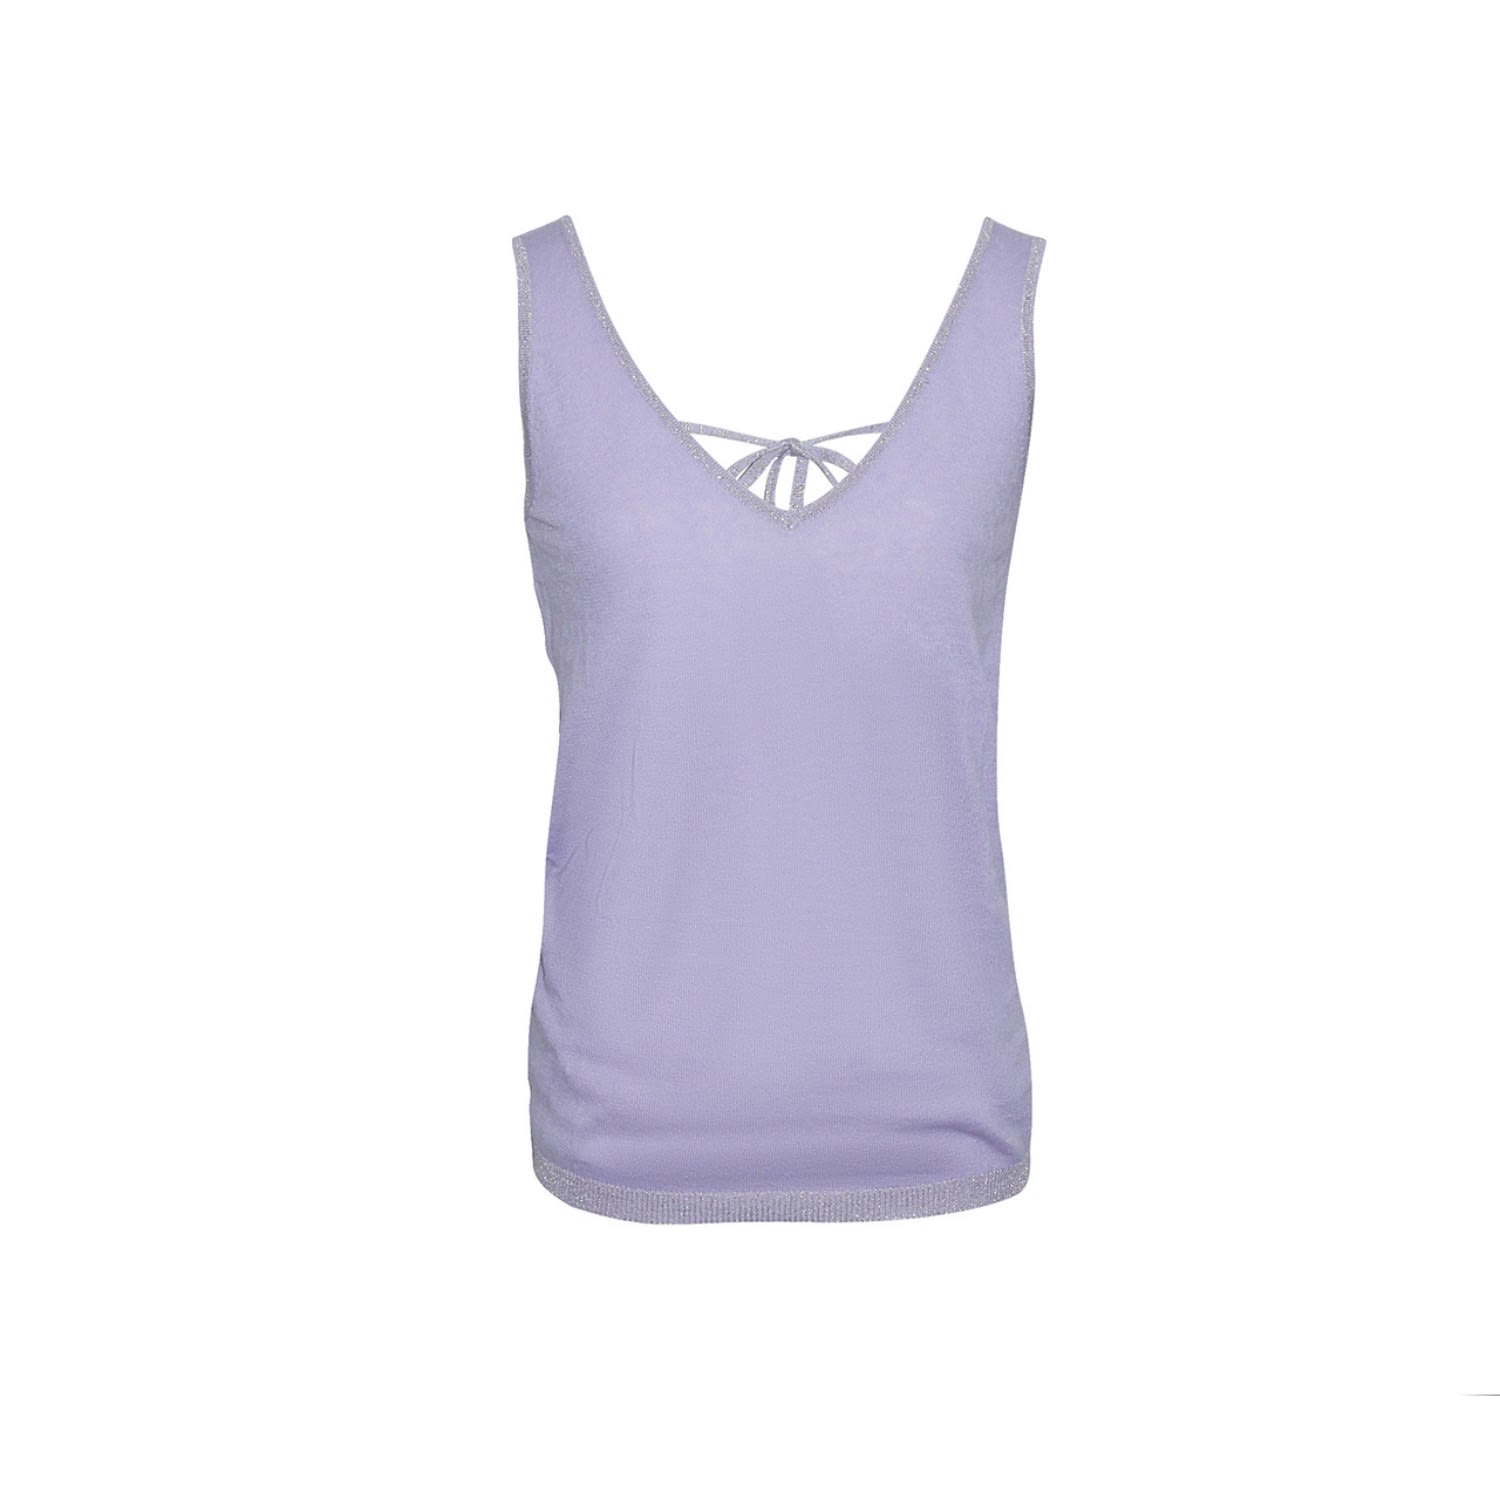 Women’s Pink / Purple Knit Tie Up Tank Top - Pink & Purple S/M Gosia Orlowska